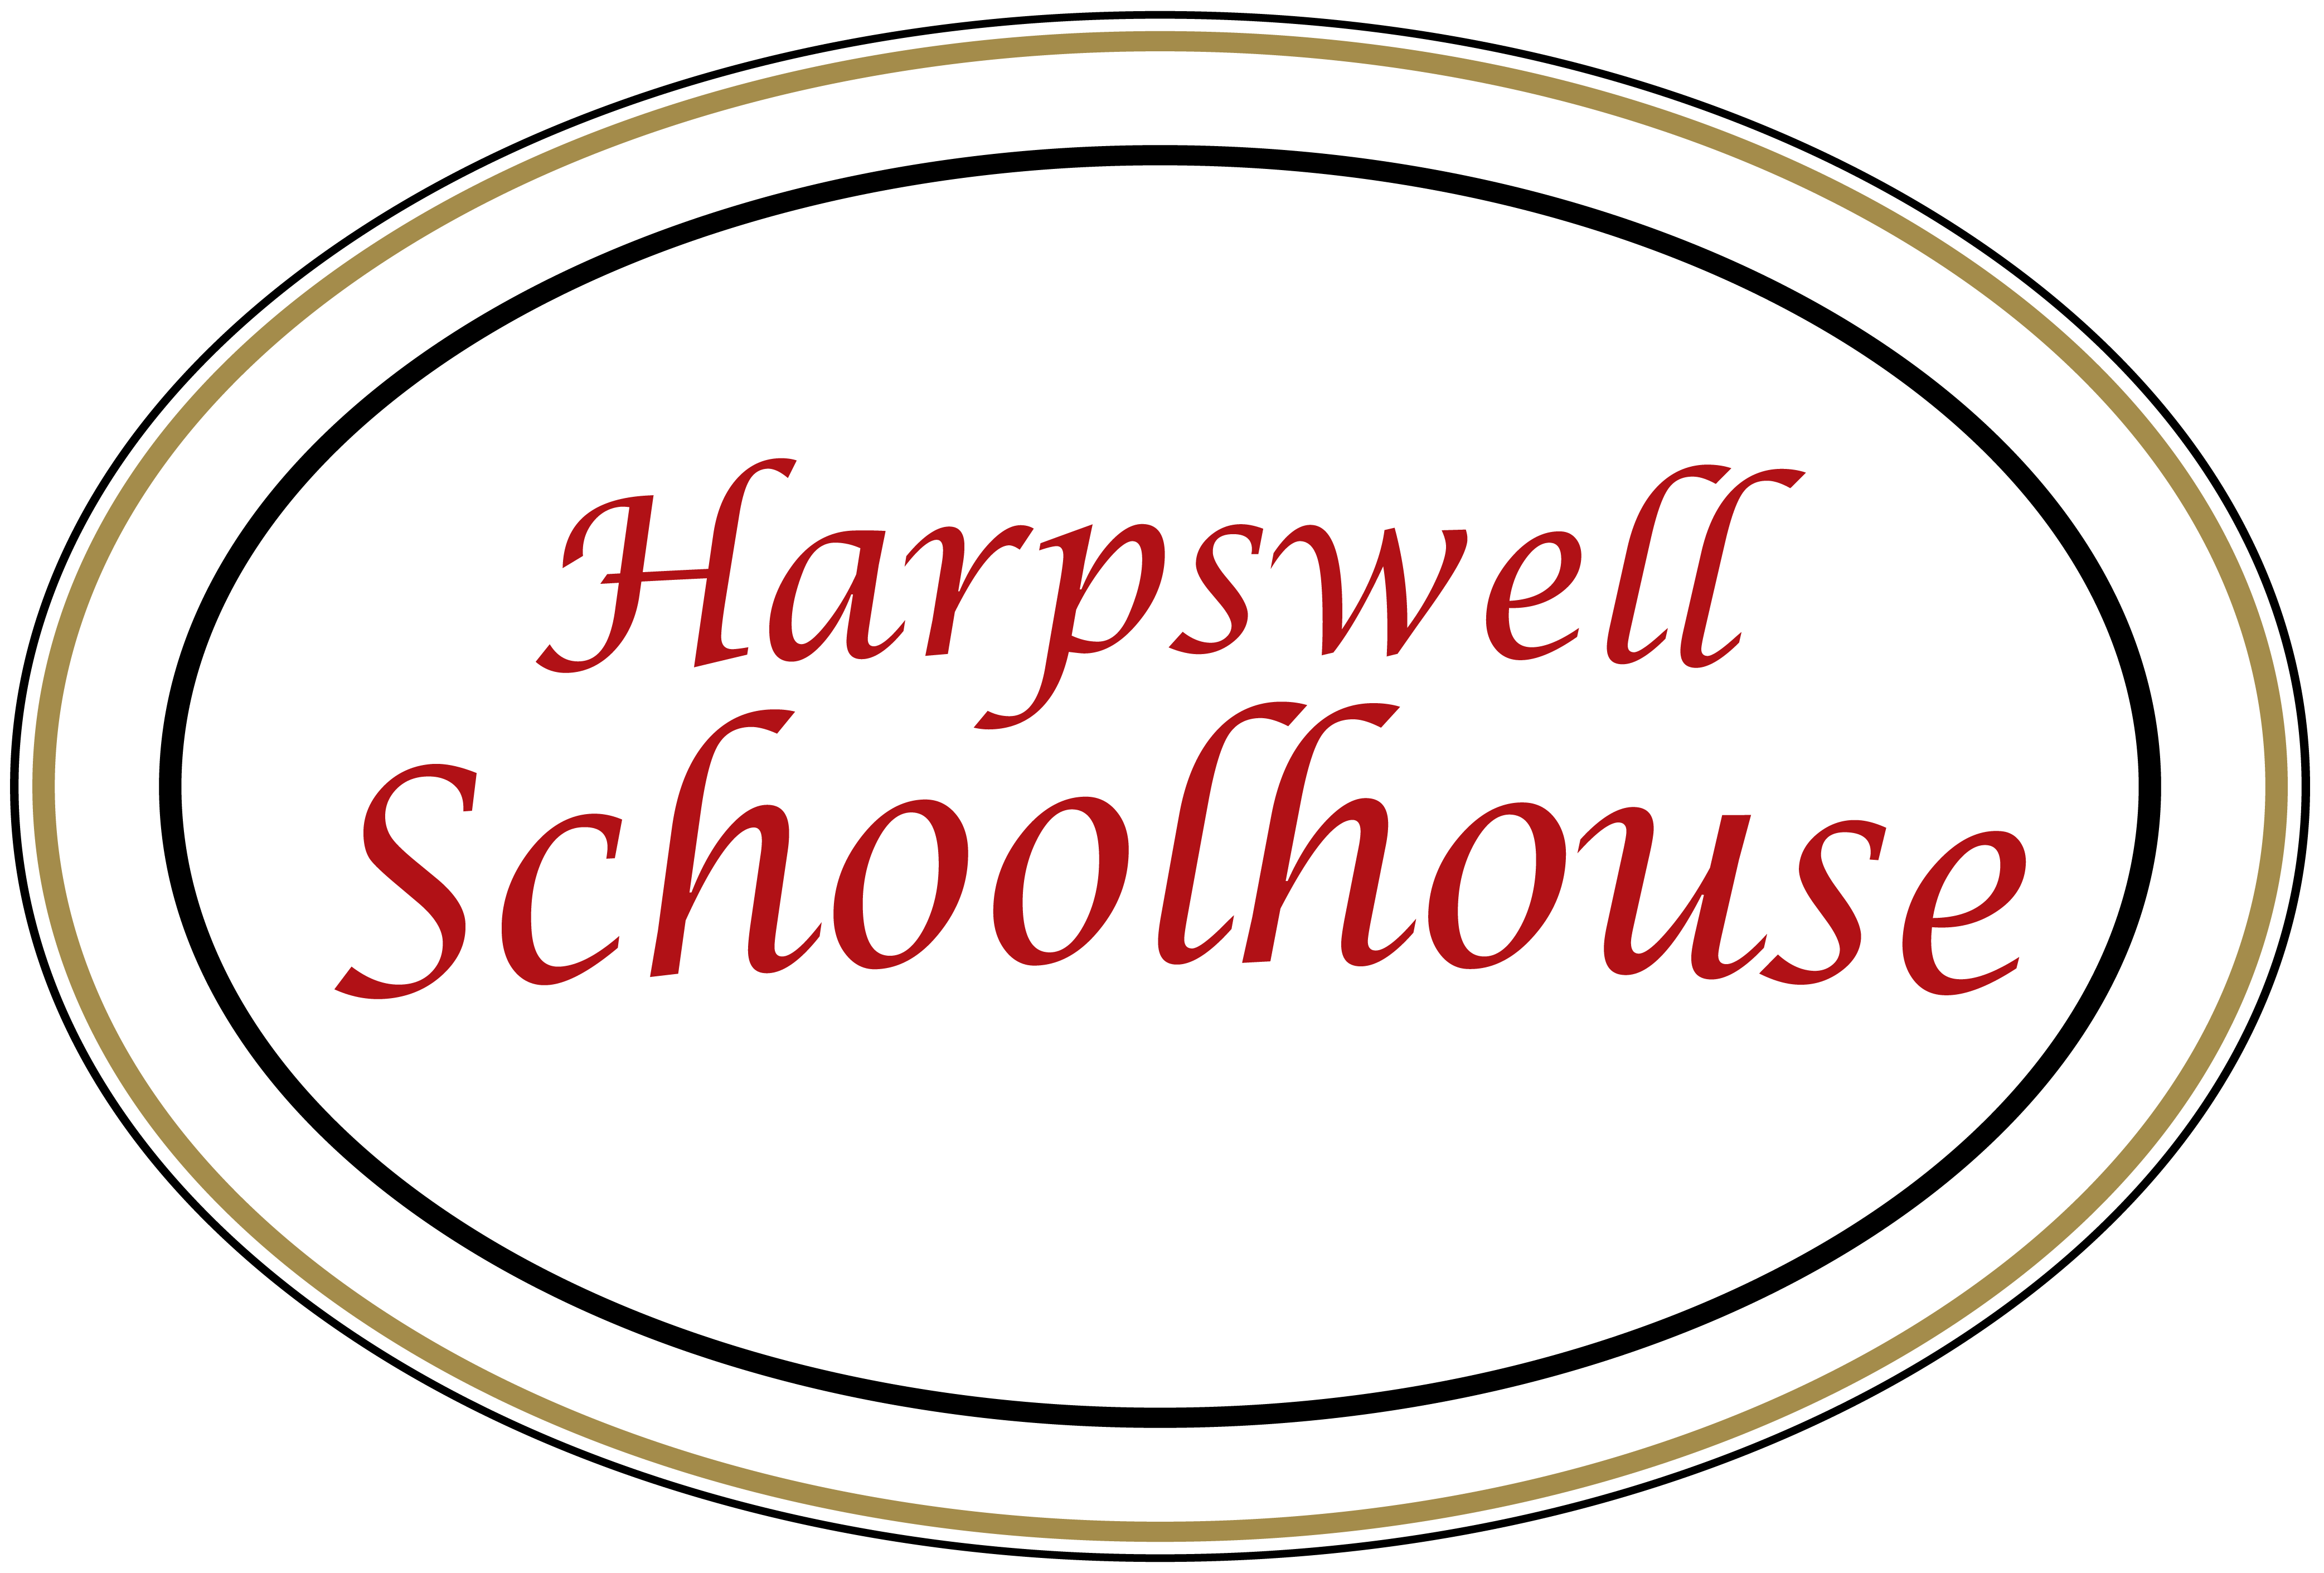 Harpswell Schoolhouse